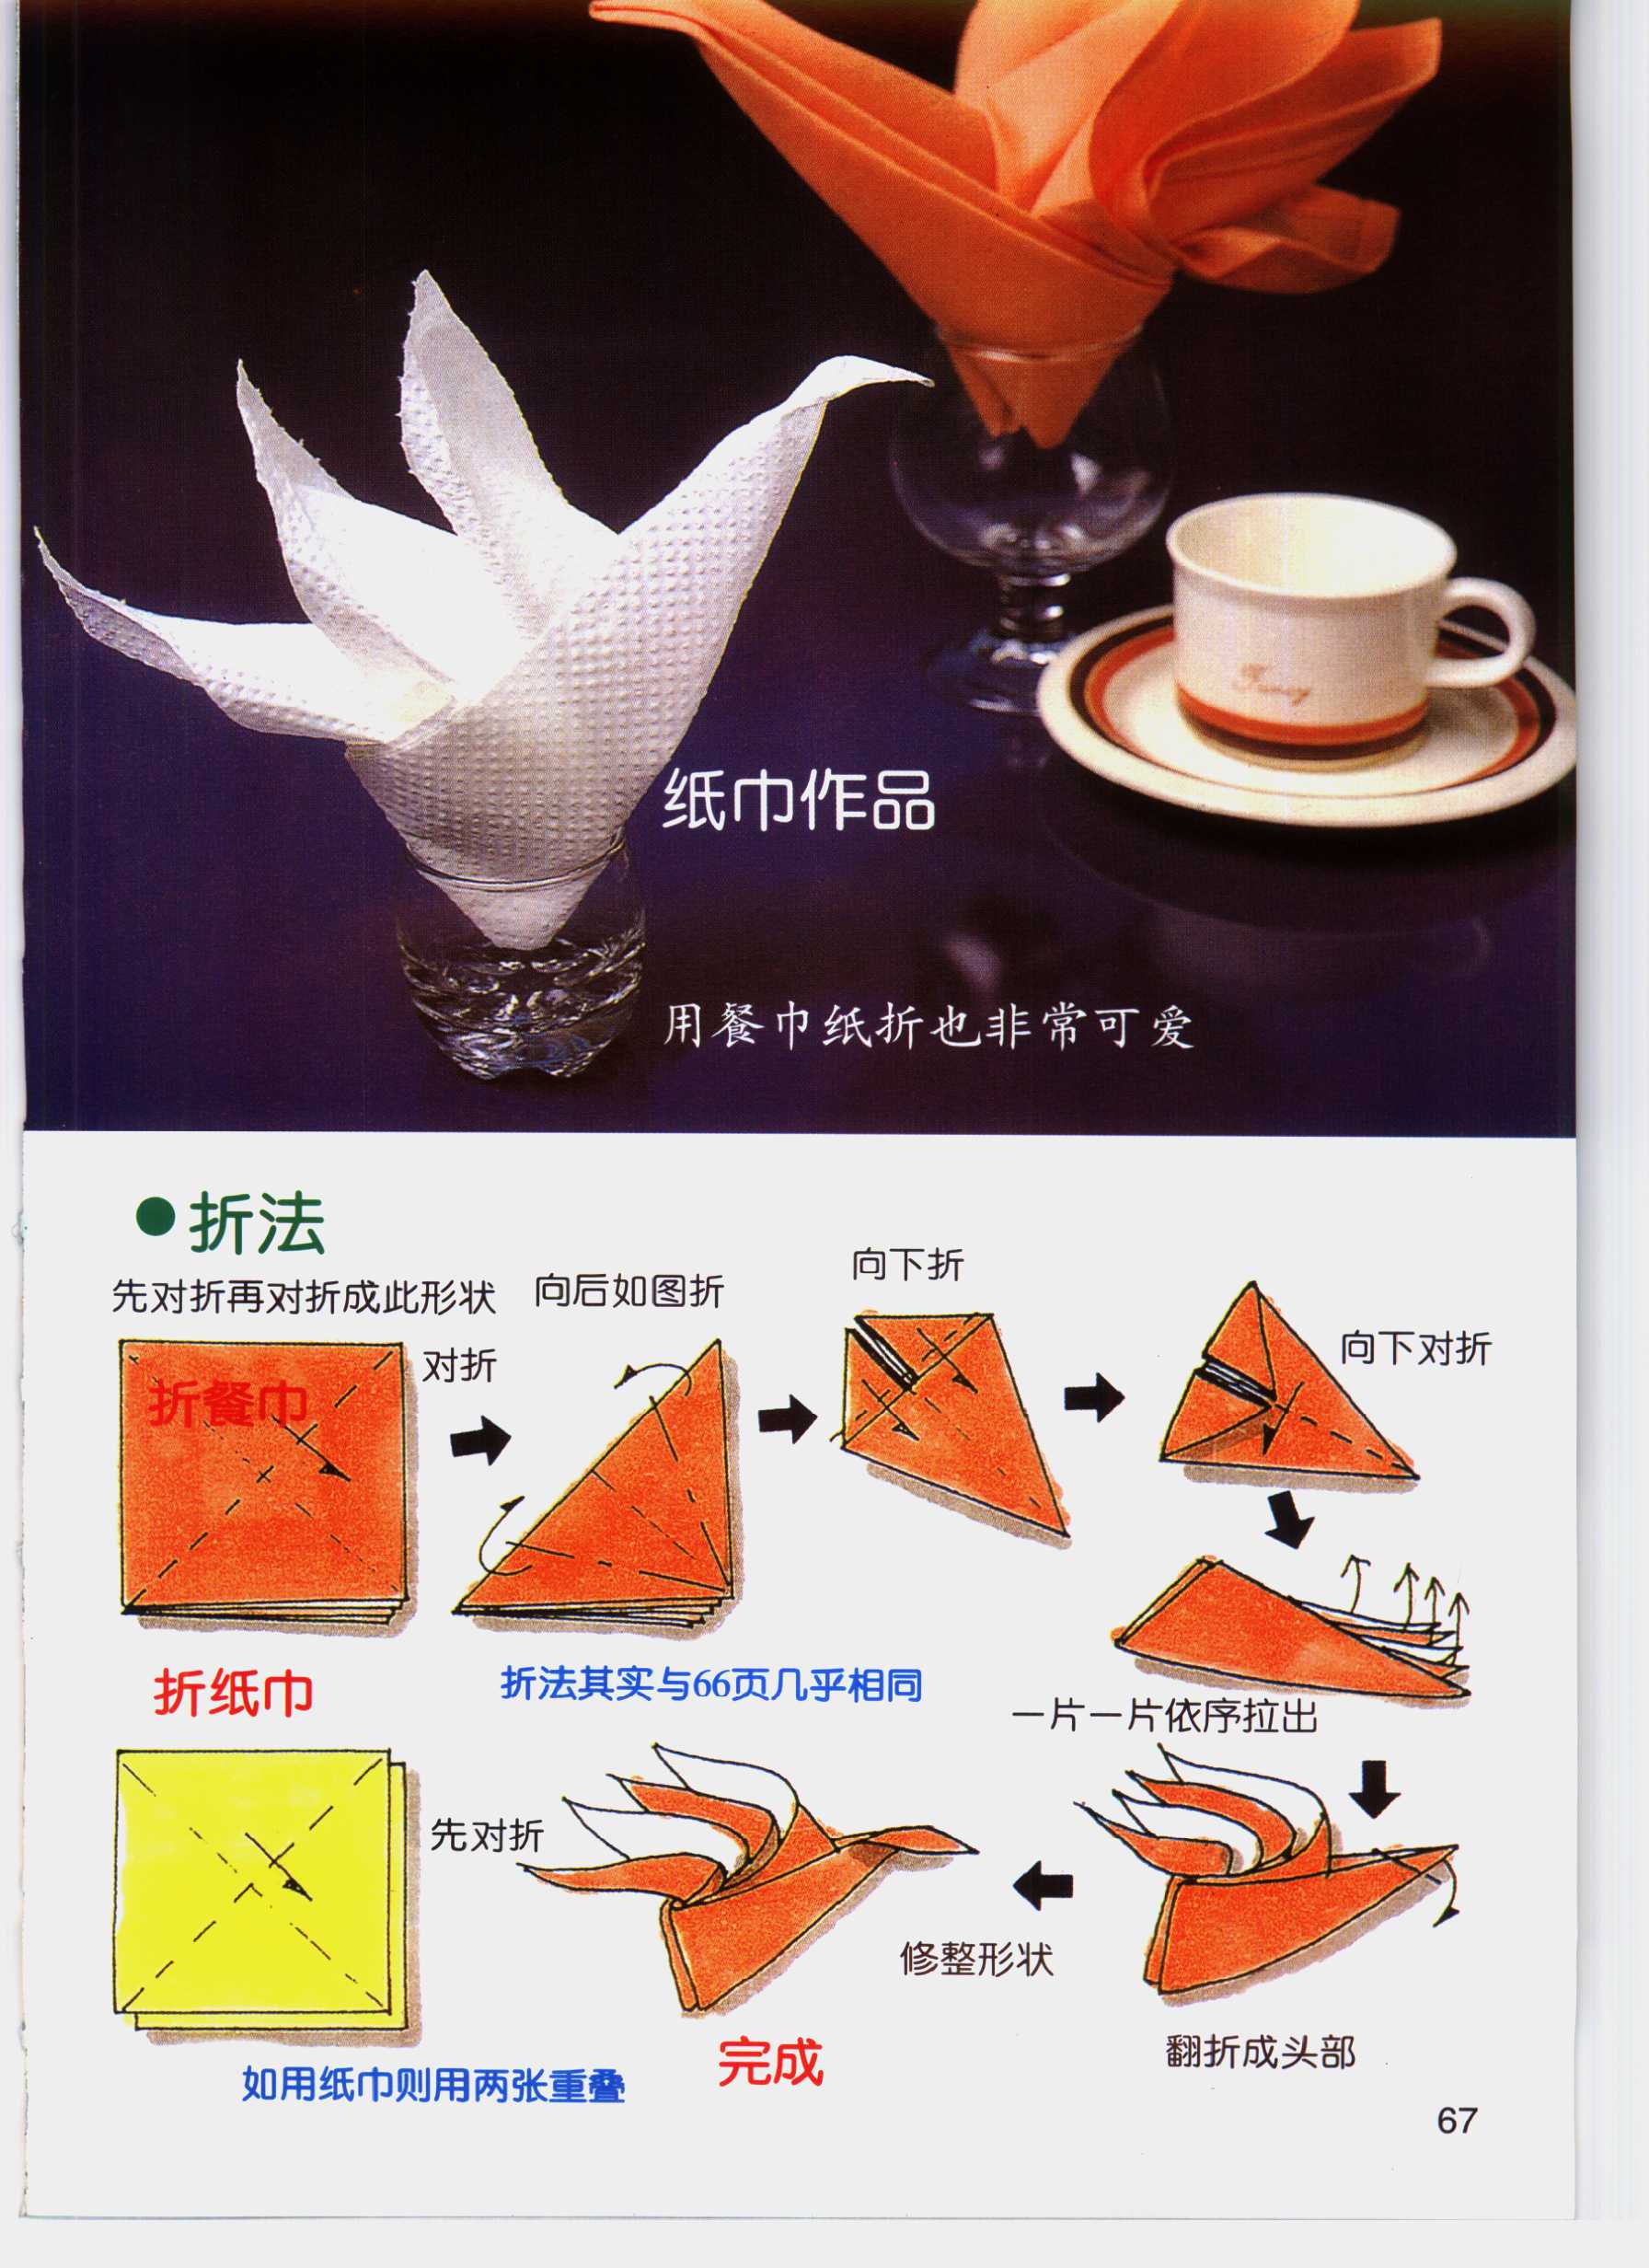 origami-składanie serwetek - 819280232.jpg